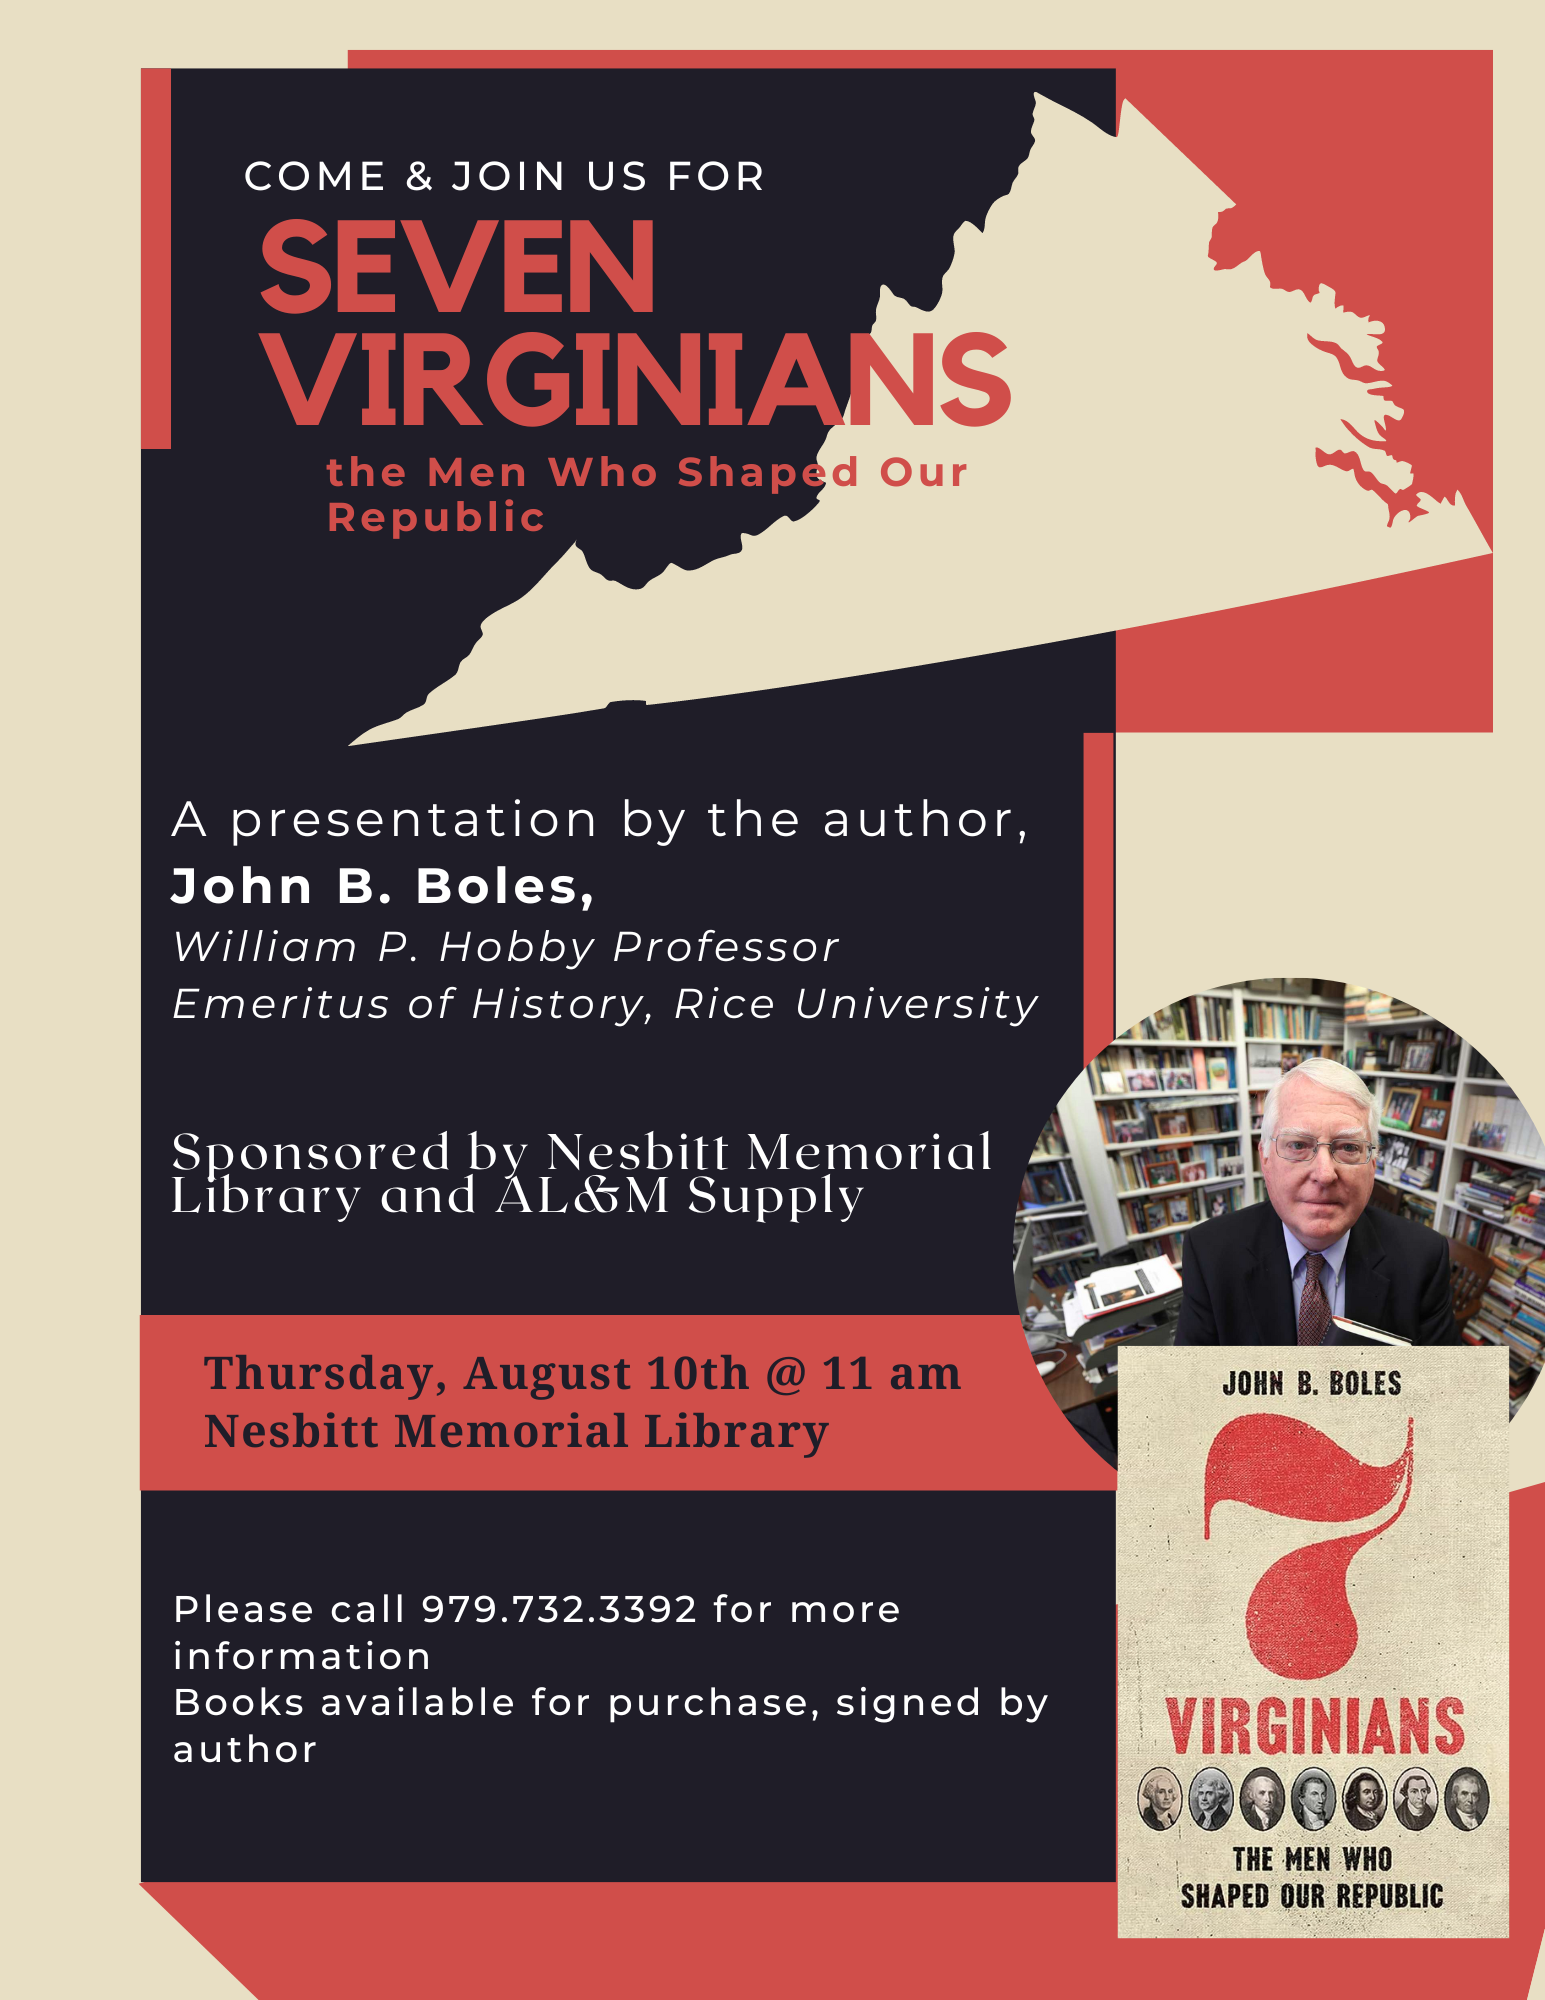 Seven Virginians presentation by the author John B. Boles 08/10 @ 11am